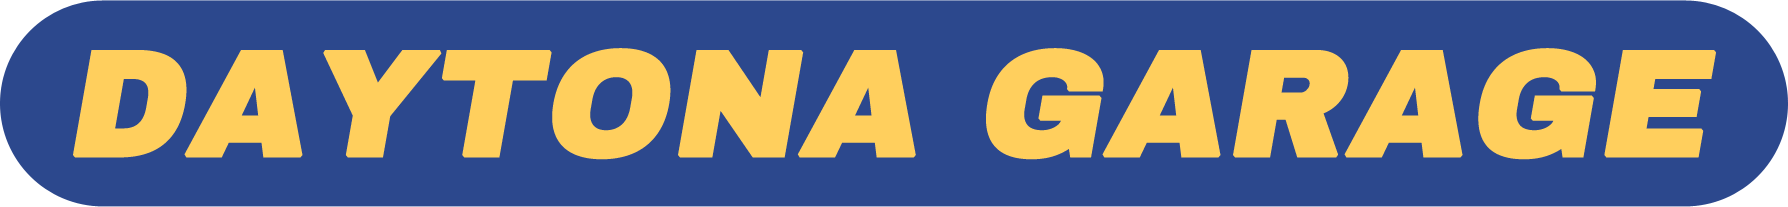 Daytona garage logo